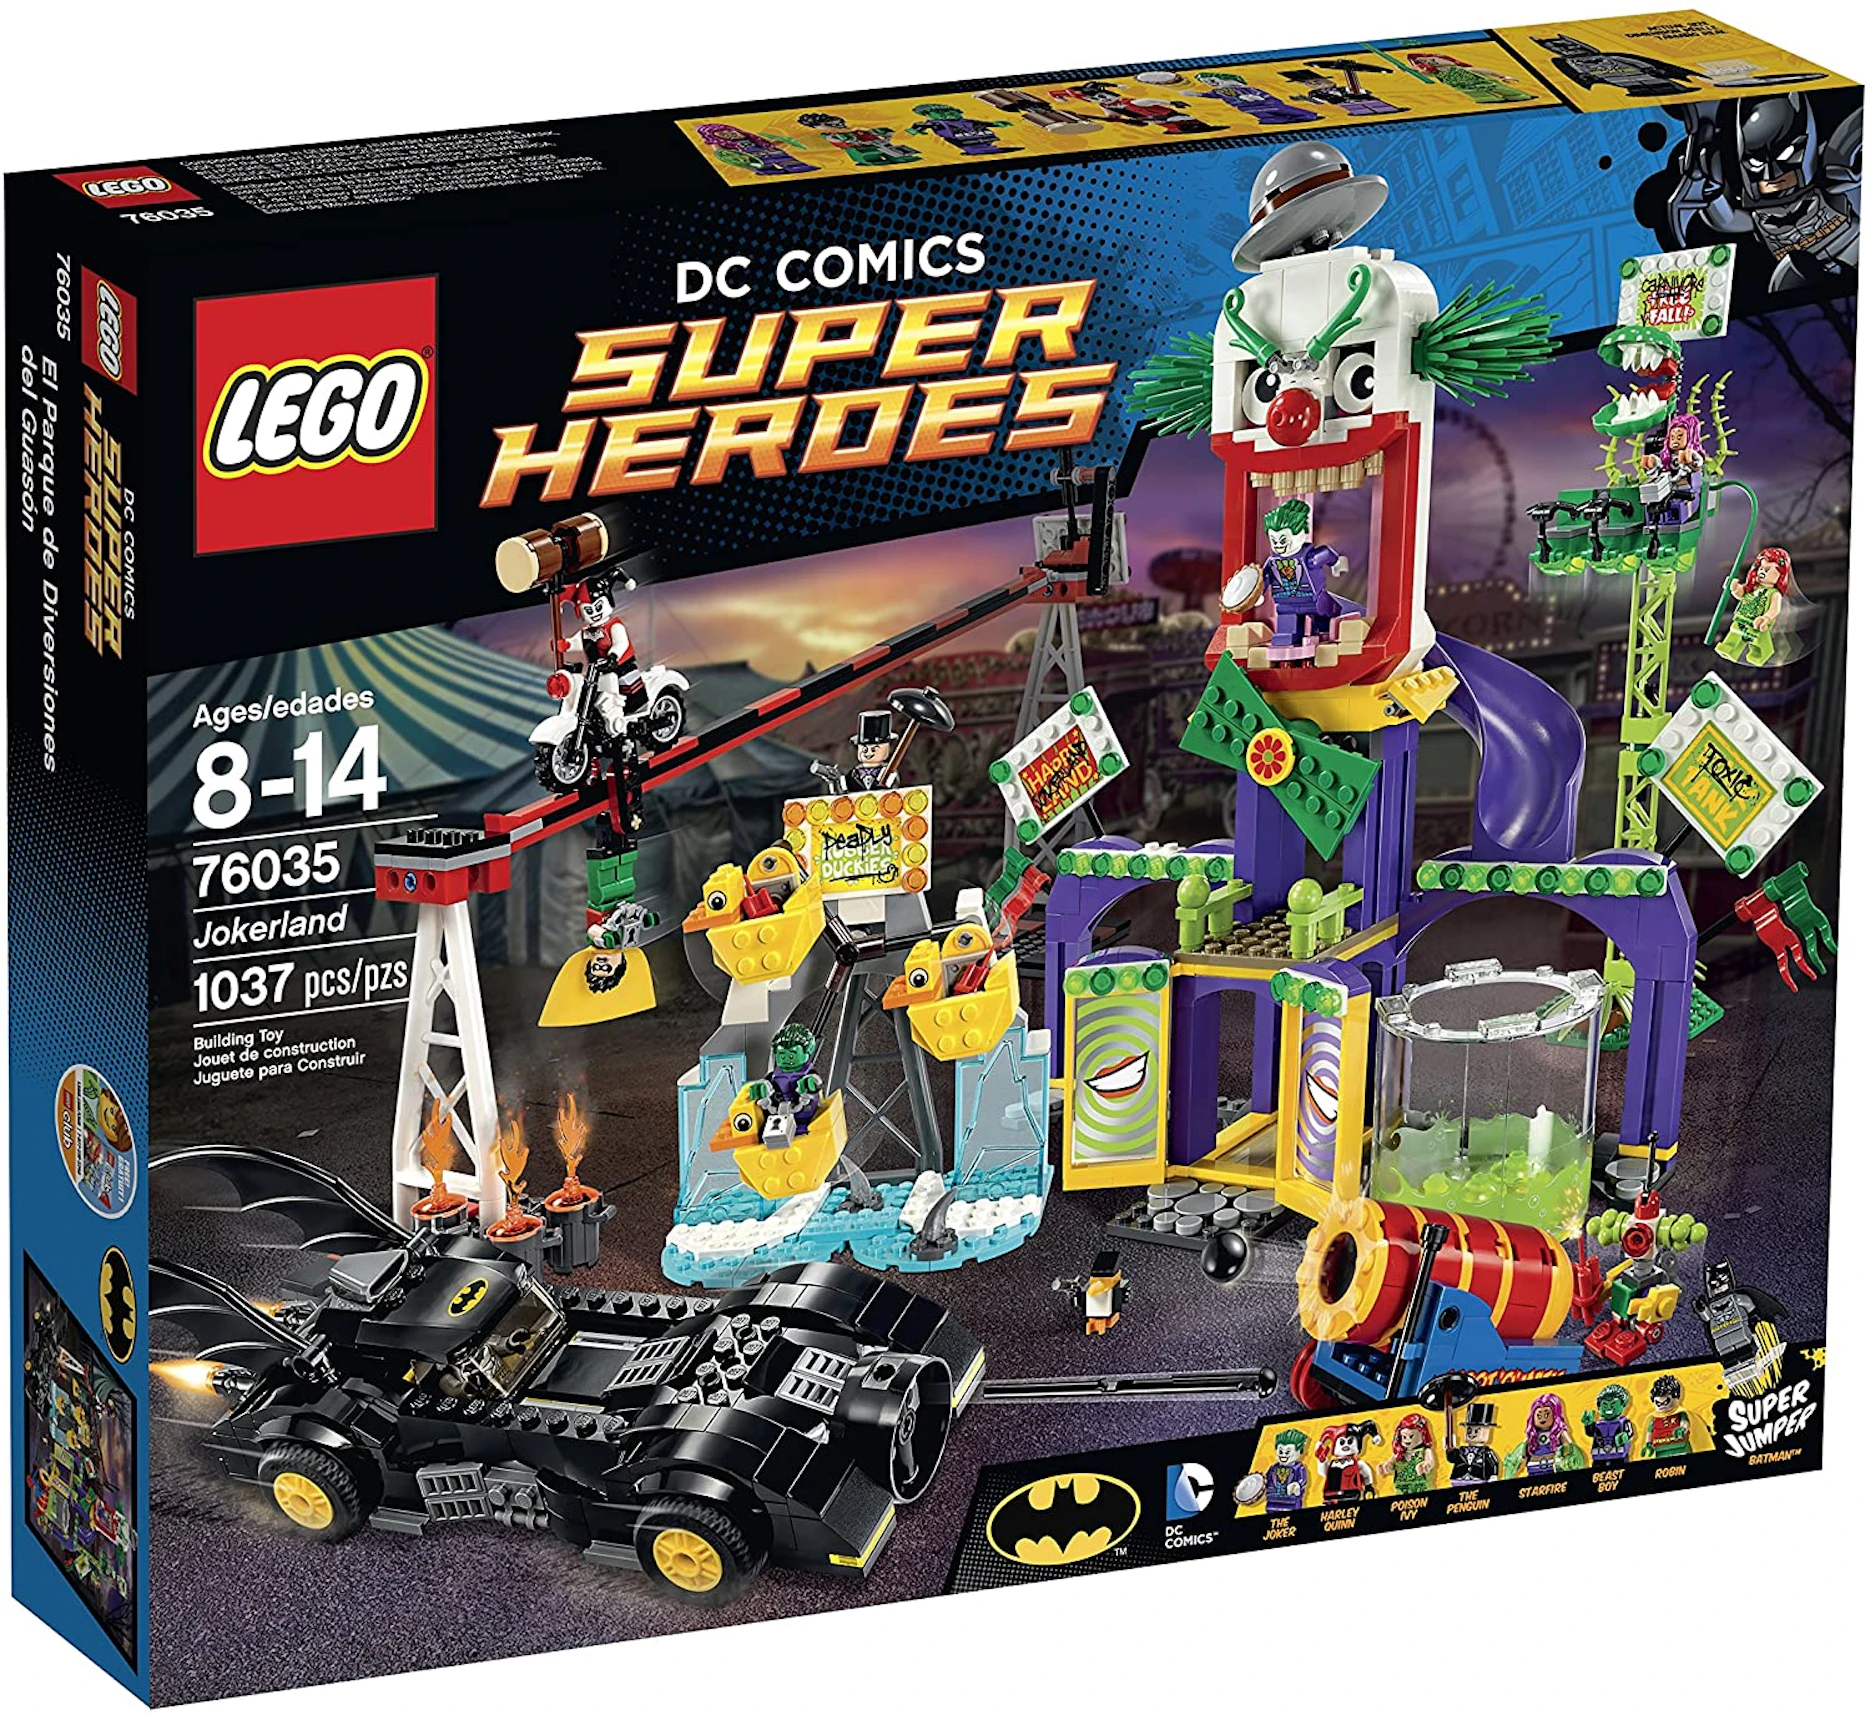 LEGO DC Comics Super Heroes Jokerland Set 76035 - US